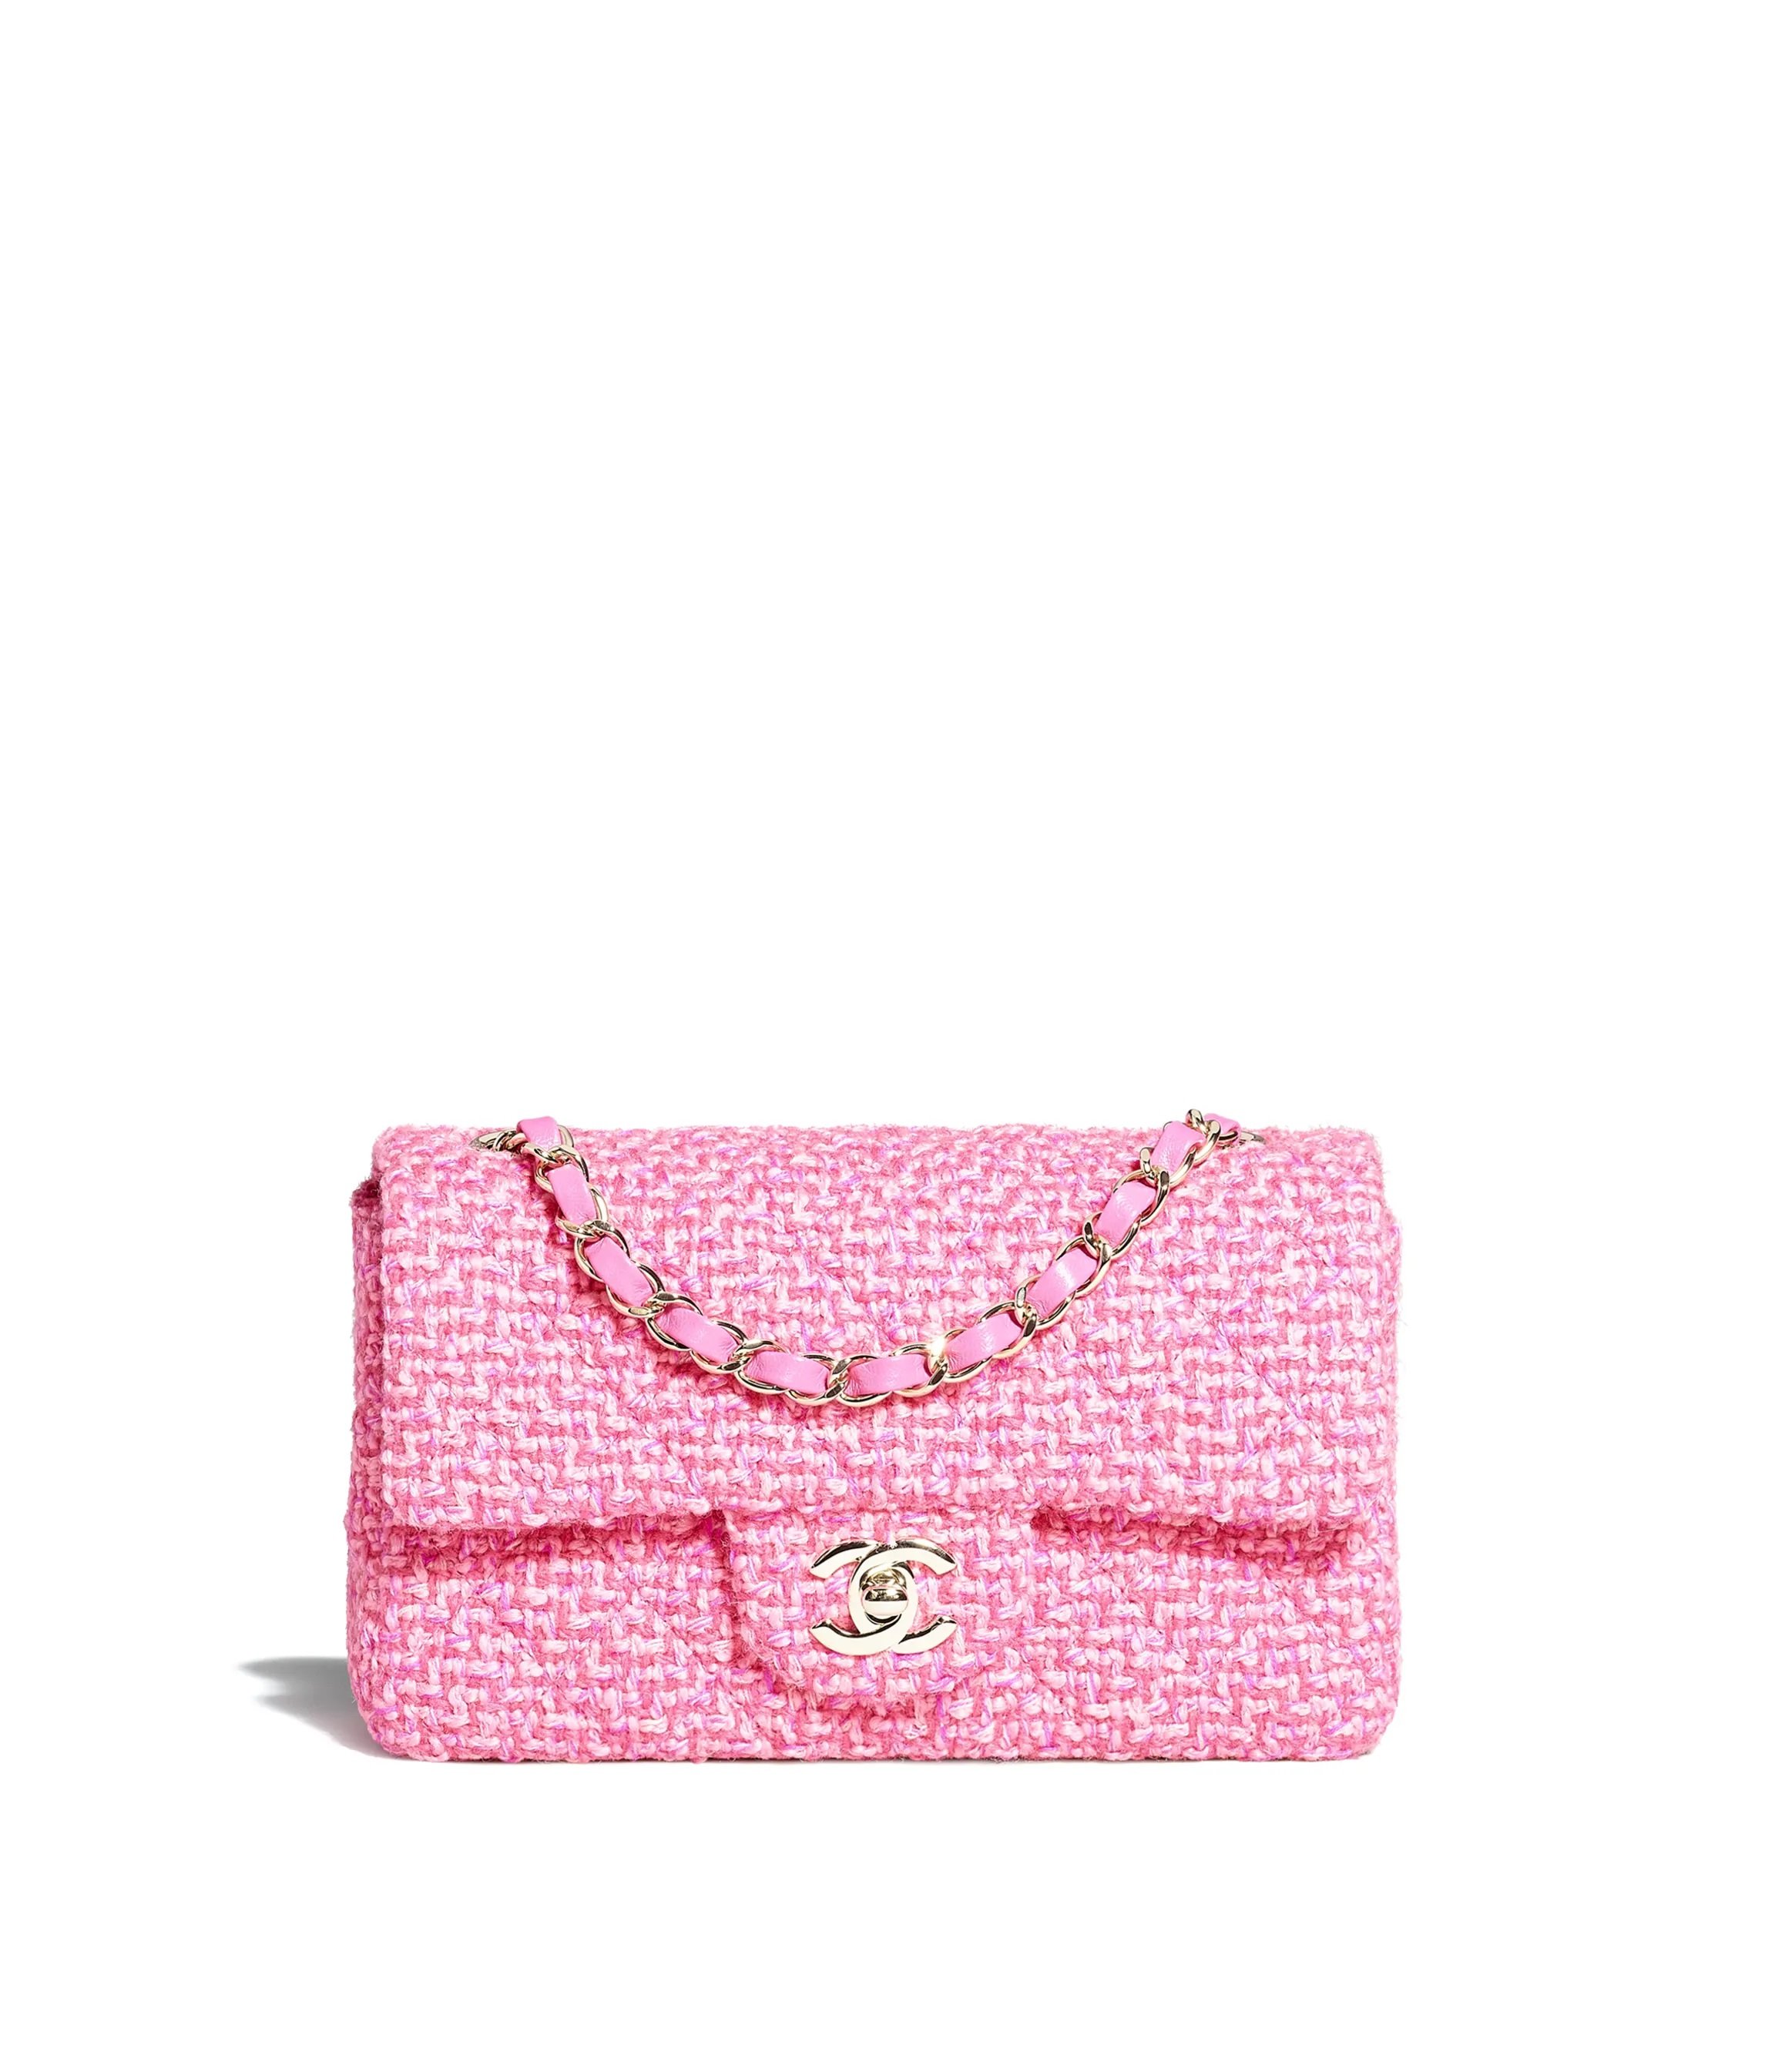 Chanel 2.55 Flap Bag in Pink, Dark Pink & Fuchsia Wool Tweed — UFO No More